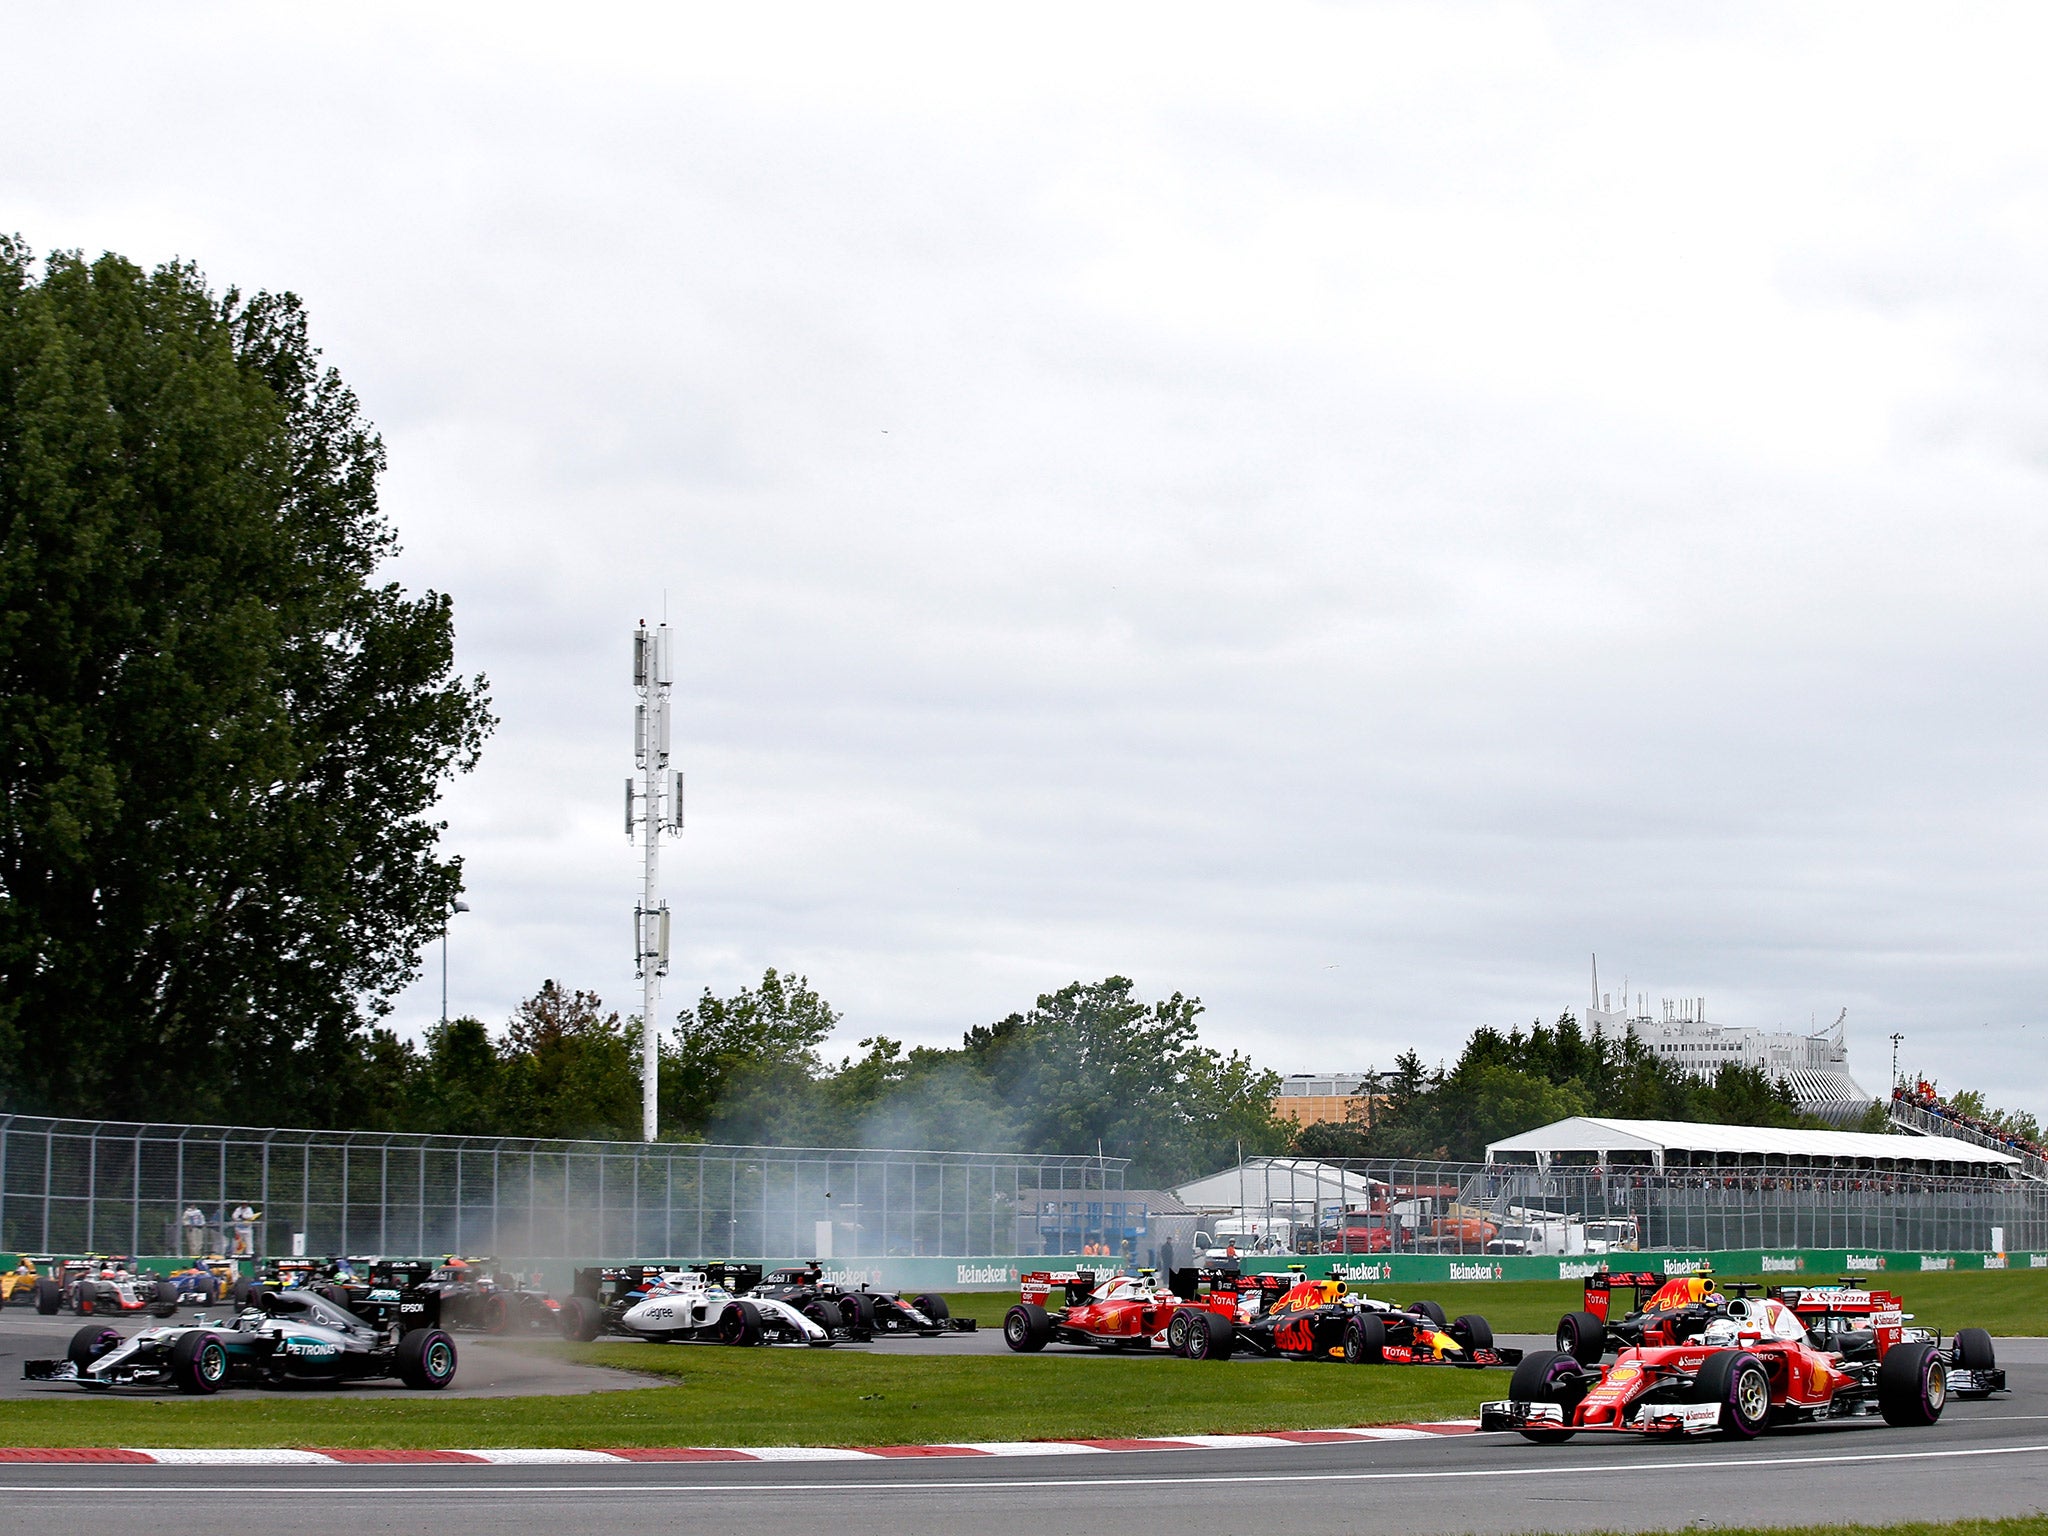 Sebastian Vettel leads the field into turn one as Nico Rosberg cuts the first corner